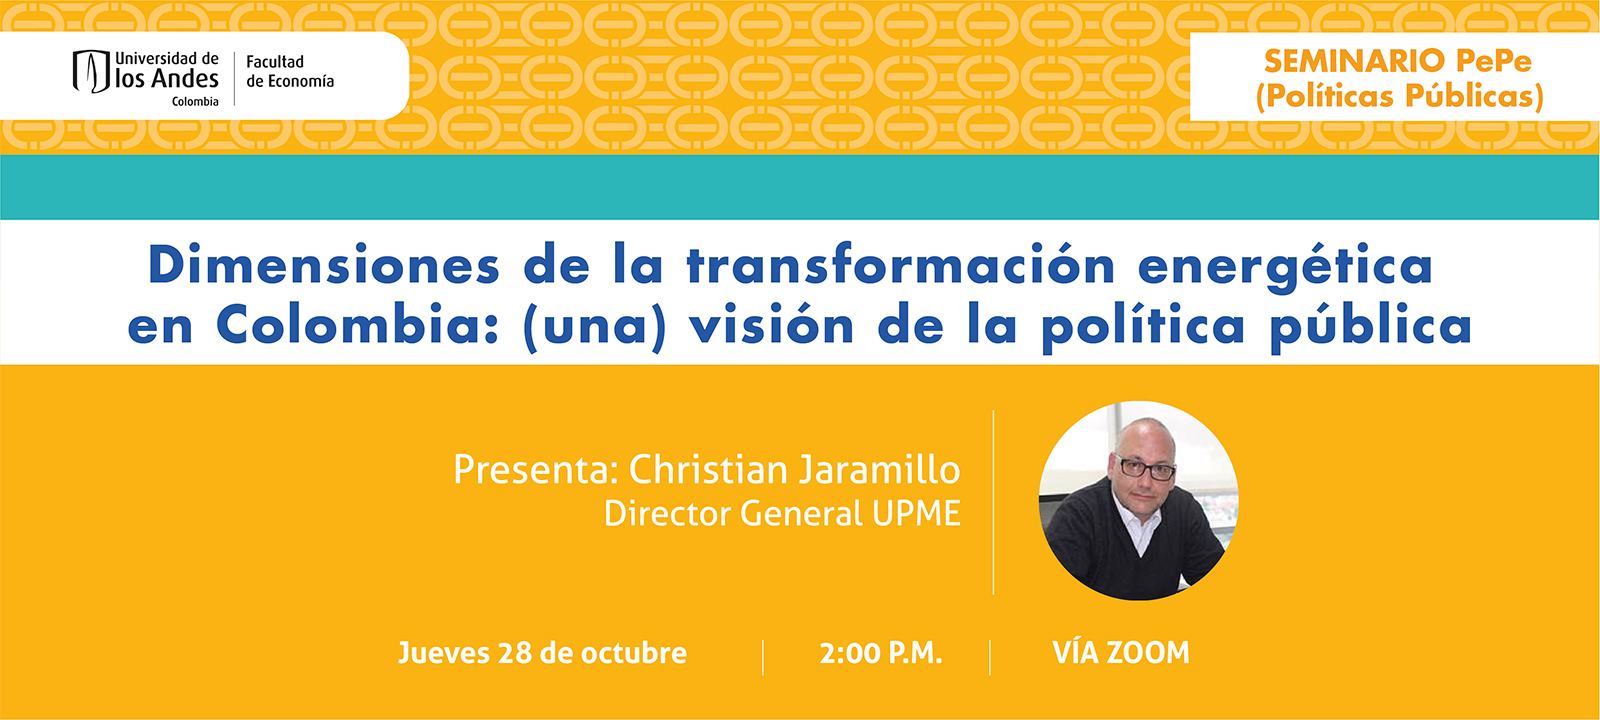 SeminarioPepe-2021-10-28-Christian-Jaramillo.jpg